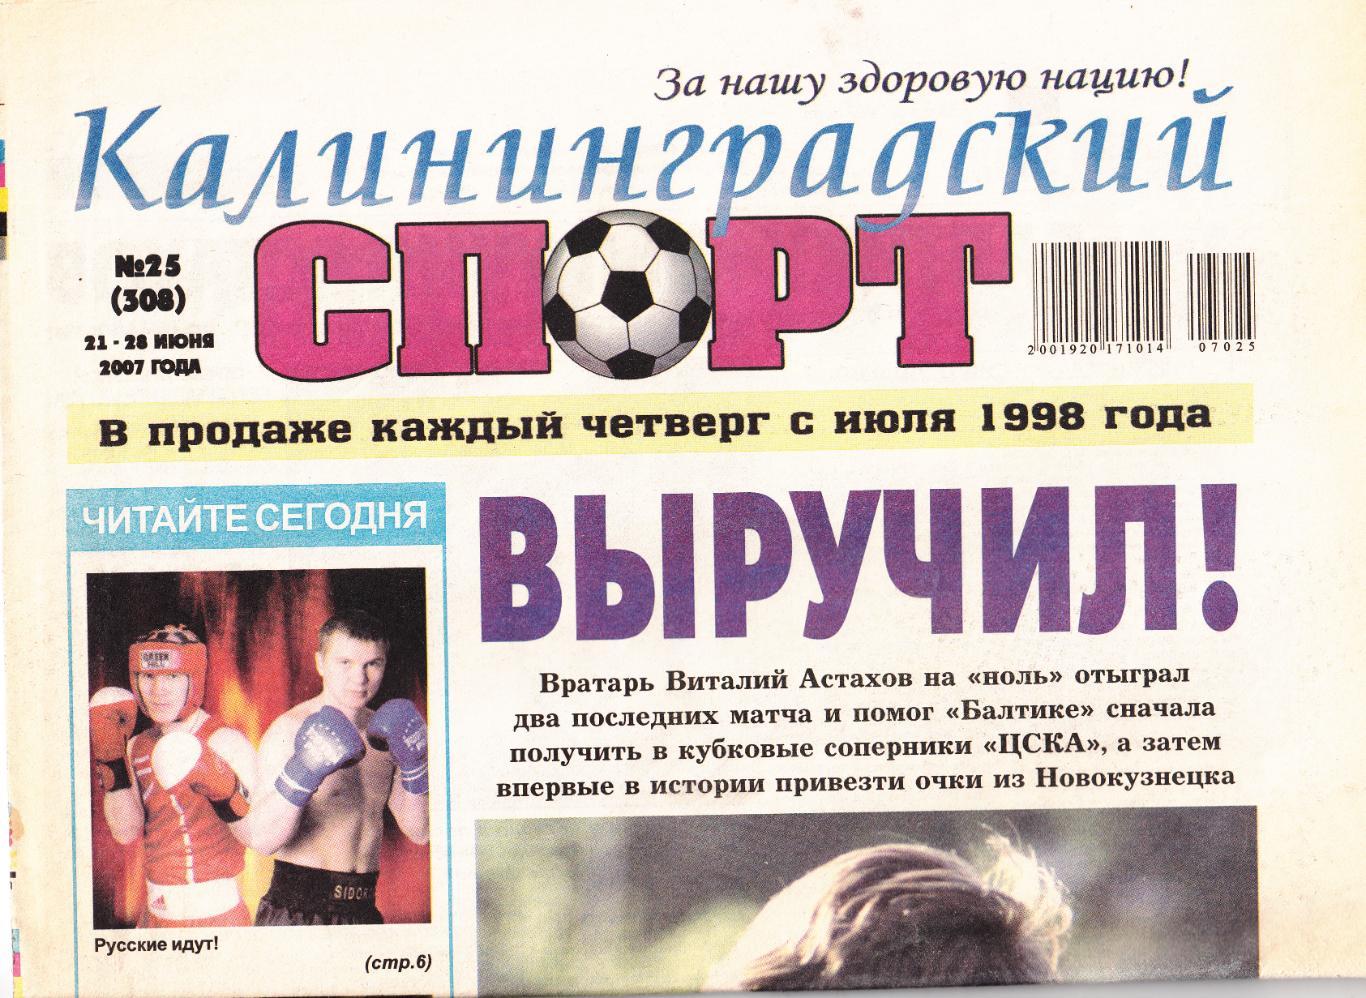 Калининградский спорт № 25 2007 3 обзора матчей Балтики + Балтики-2 (см.ниже)